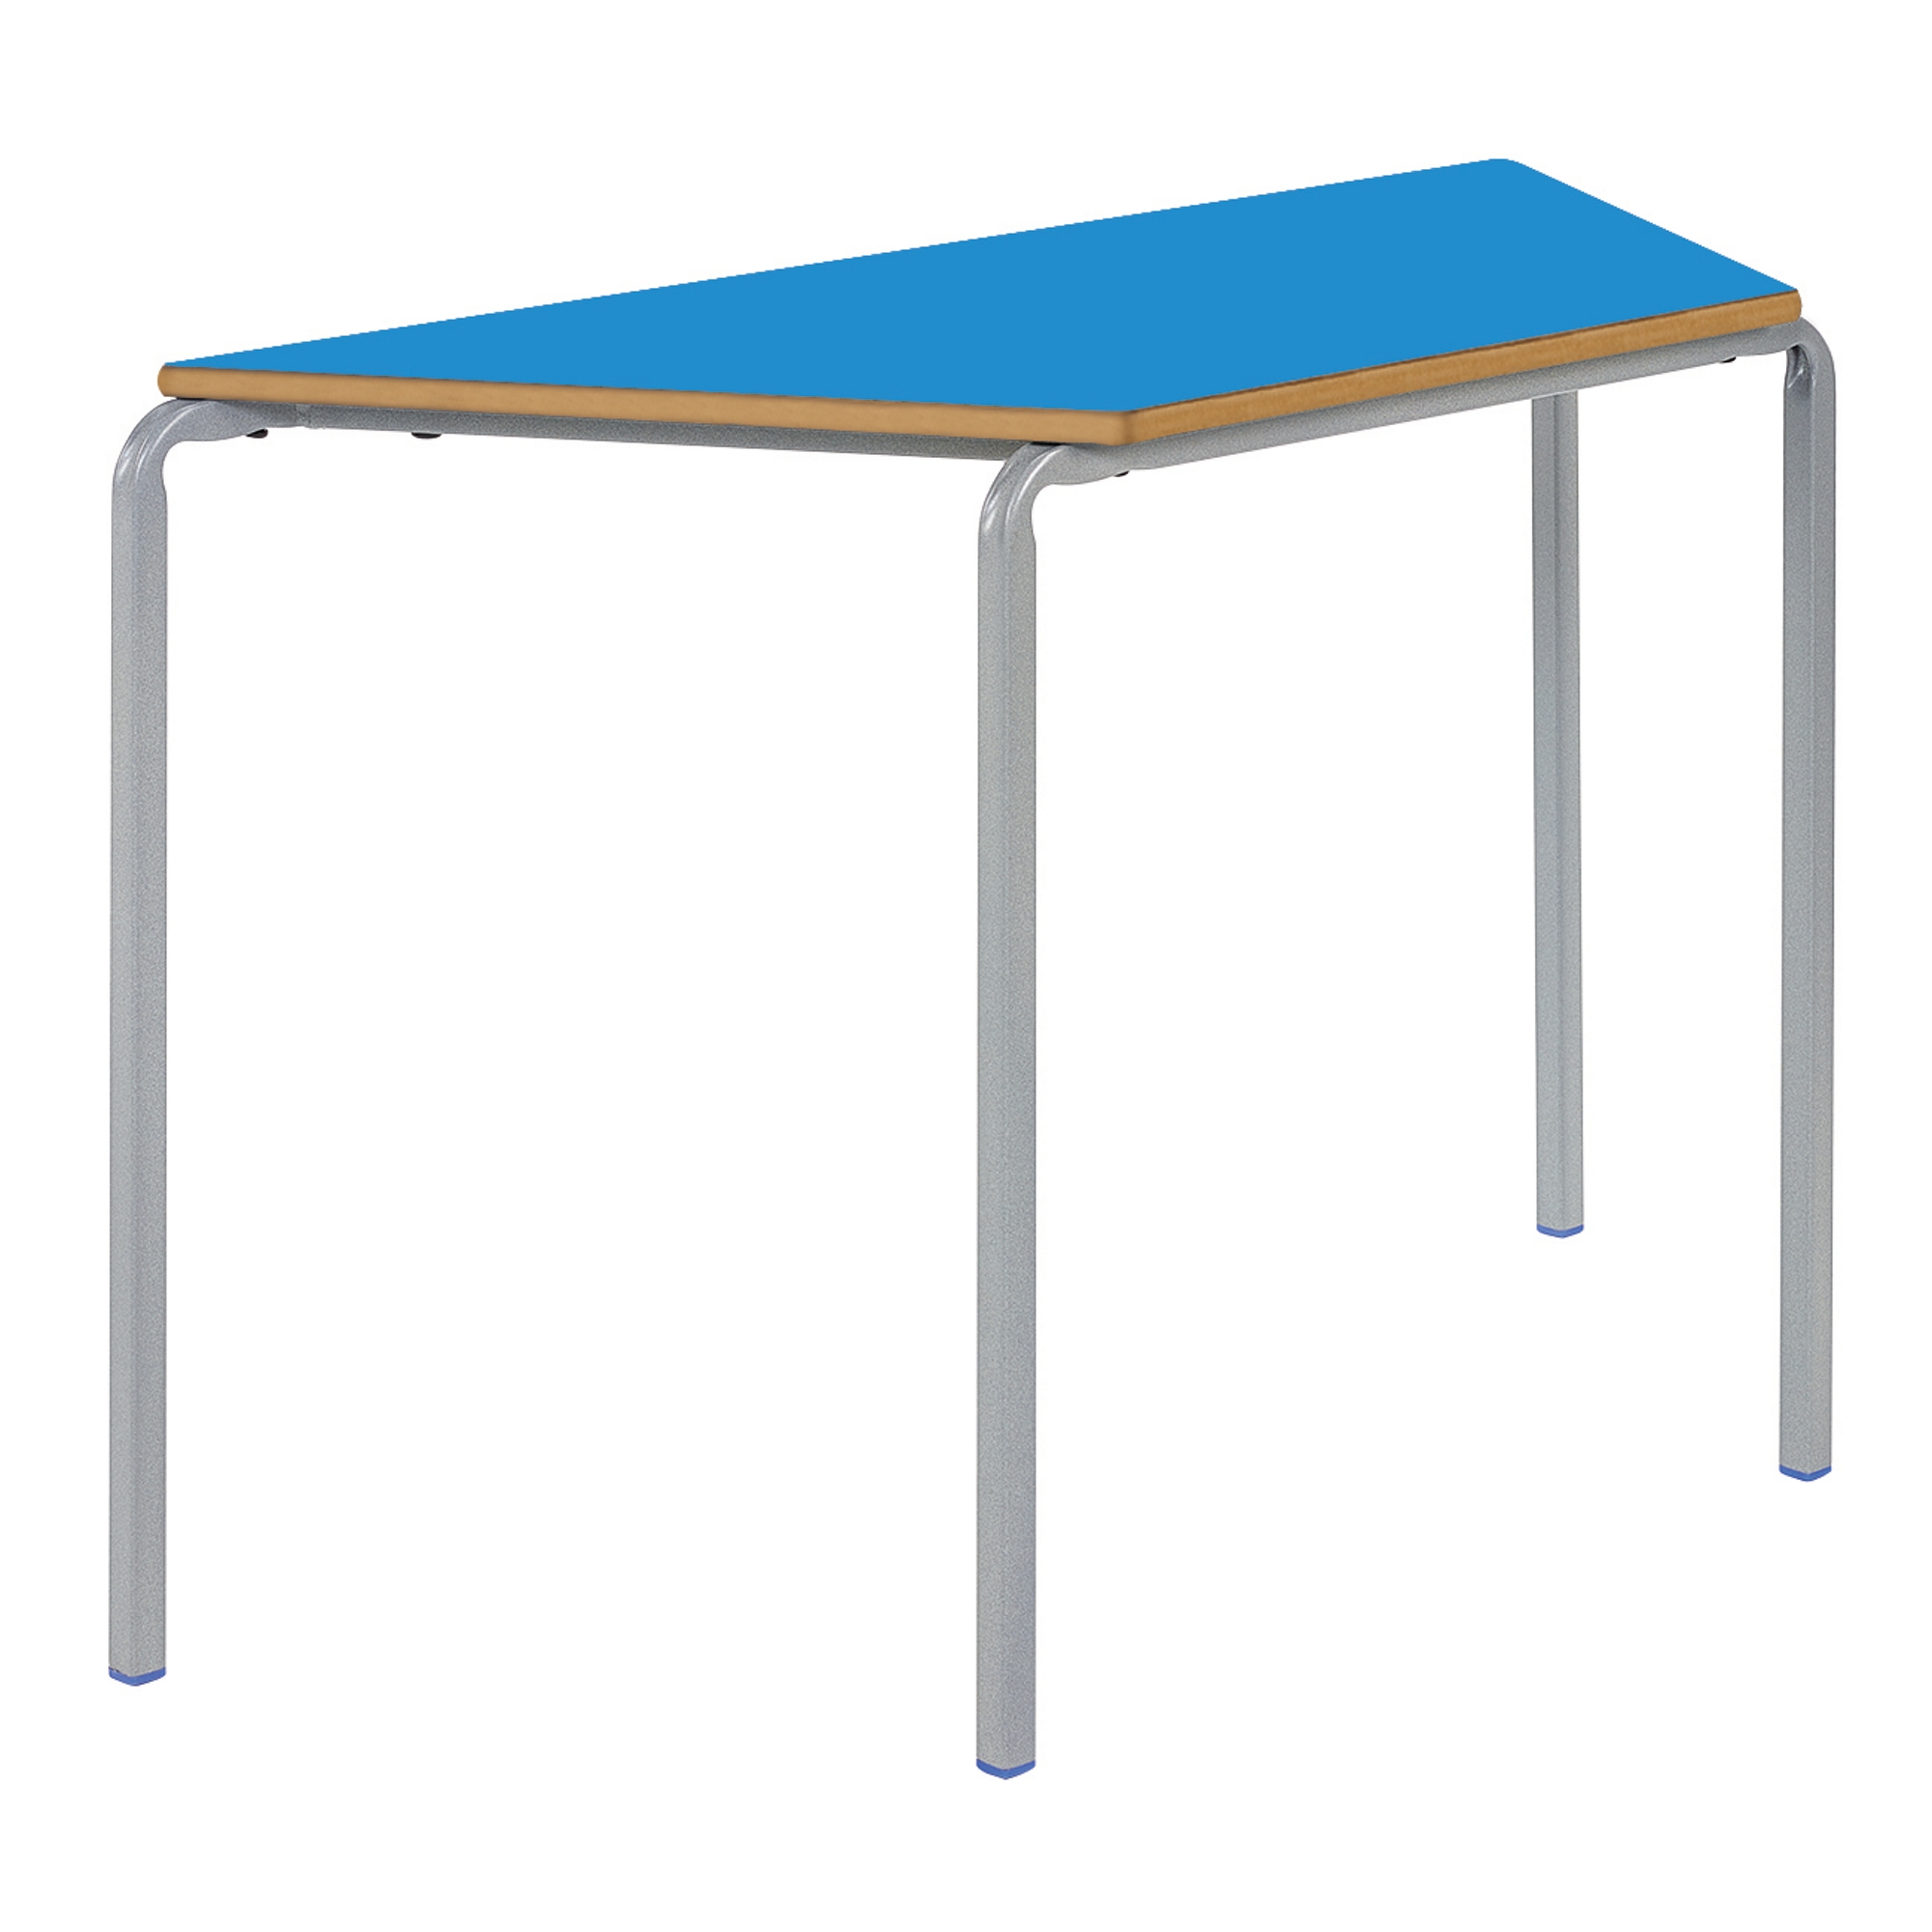 Classmates Trapezoidal Crushed Bent Classroom Table - 1100 x 550 x 460mm - Blue